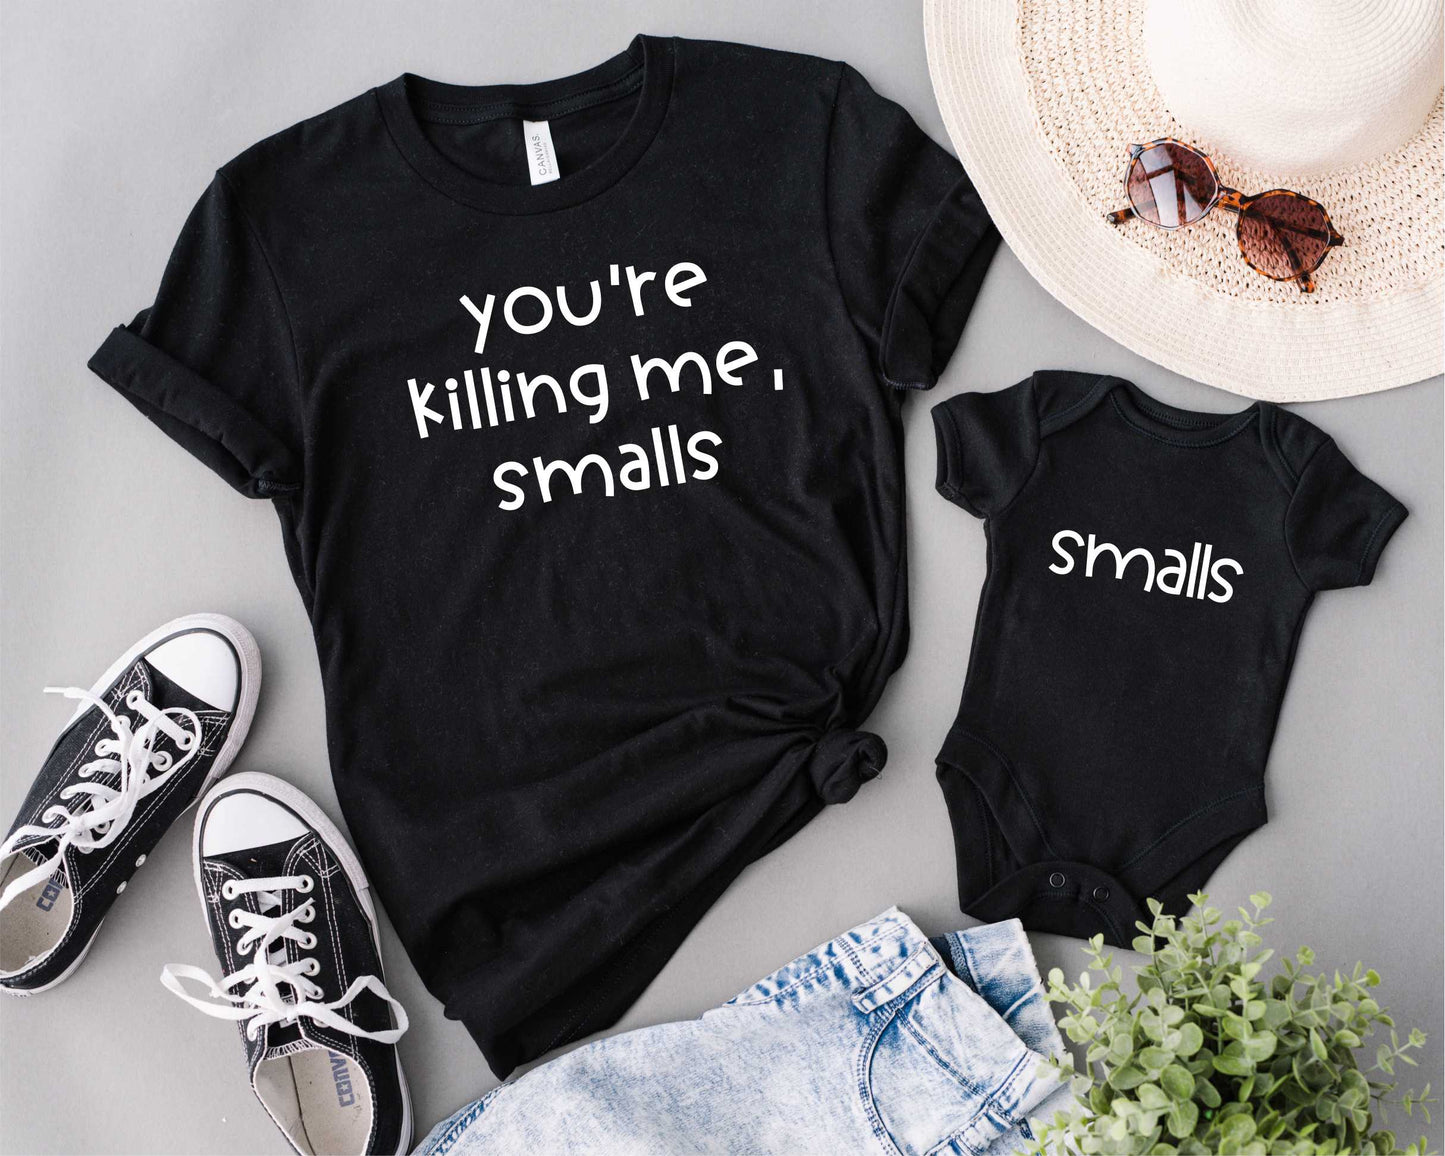 You're Killin' Me Smalls - Matching Shirts